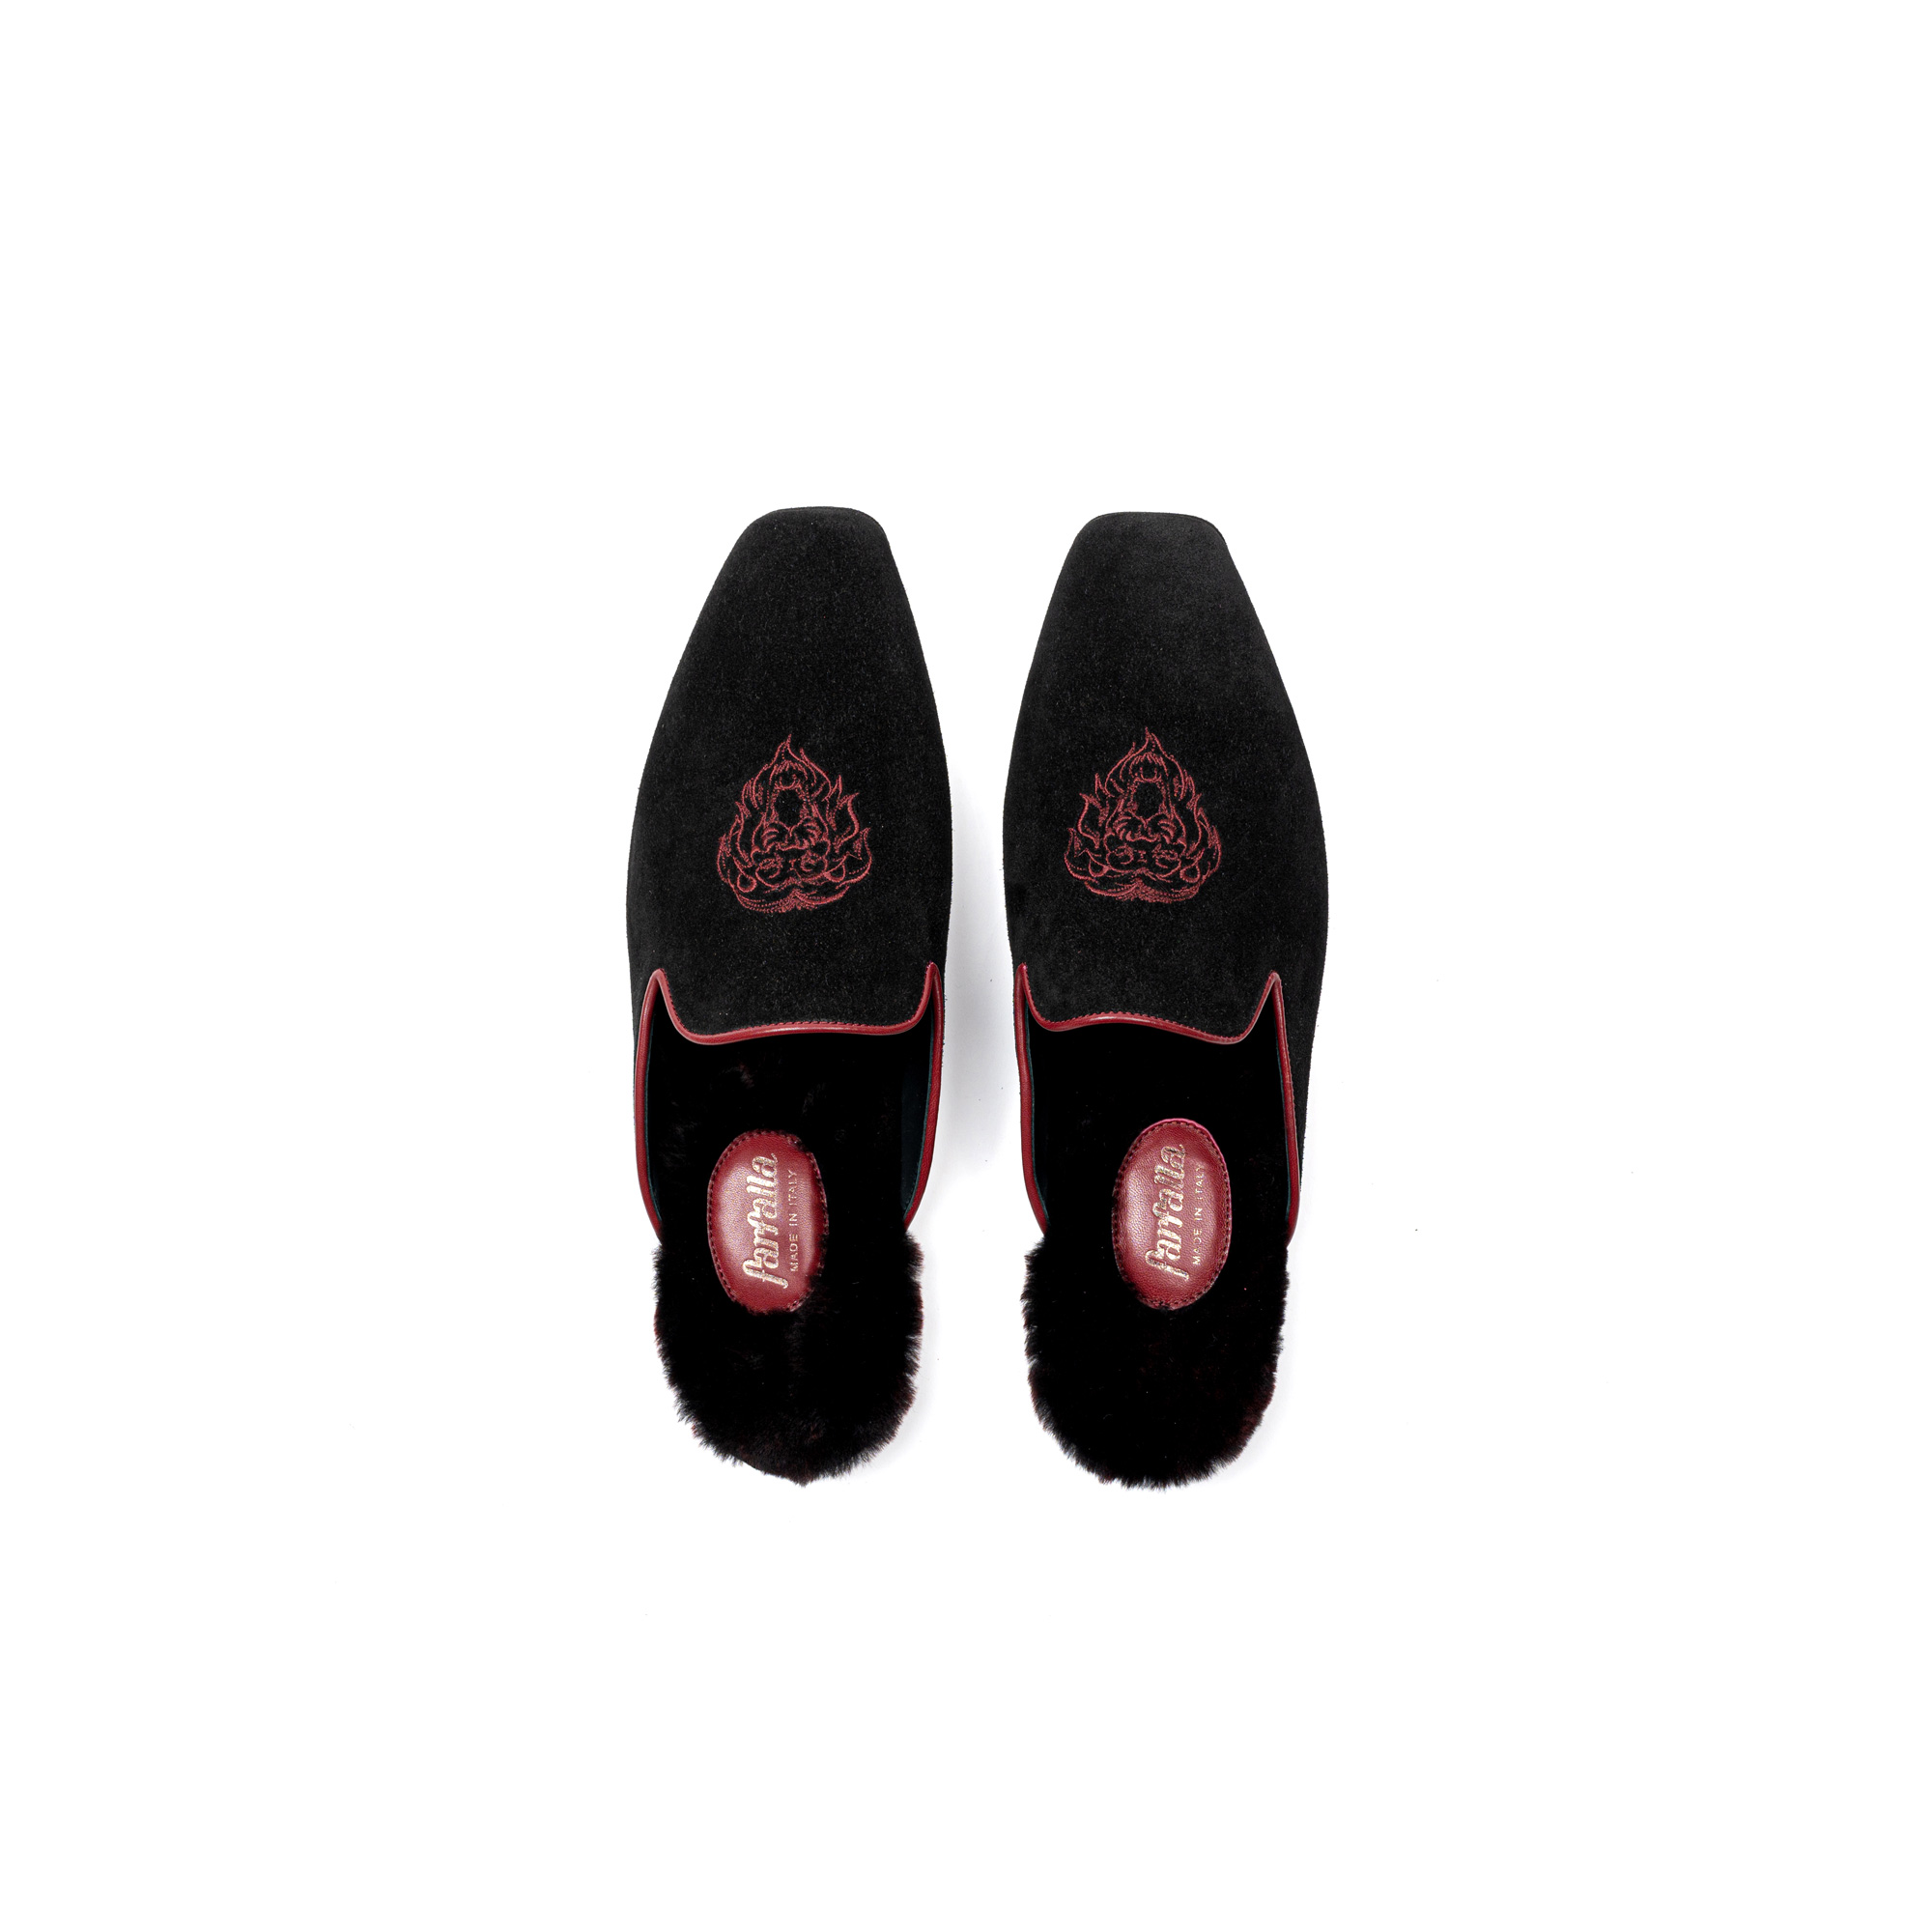 Pantofola interno lusso in velour nero - Farfalla italian slippers